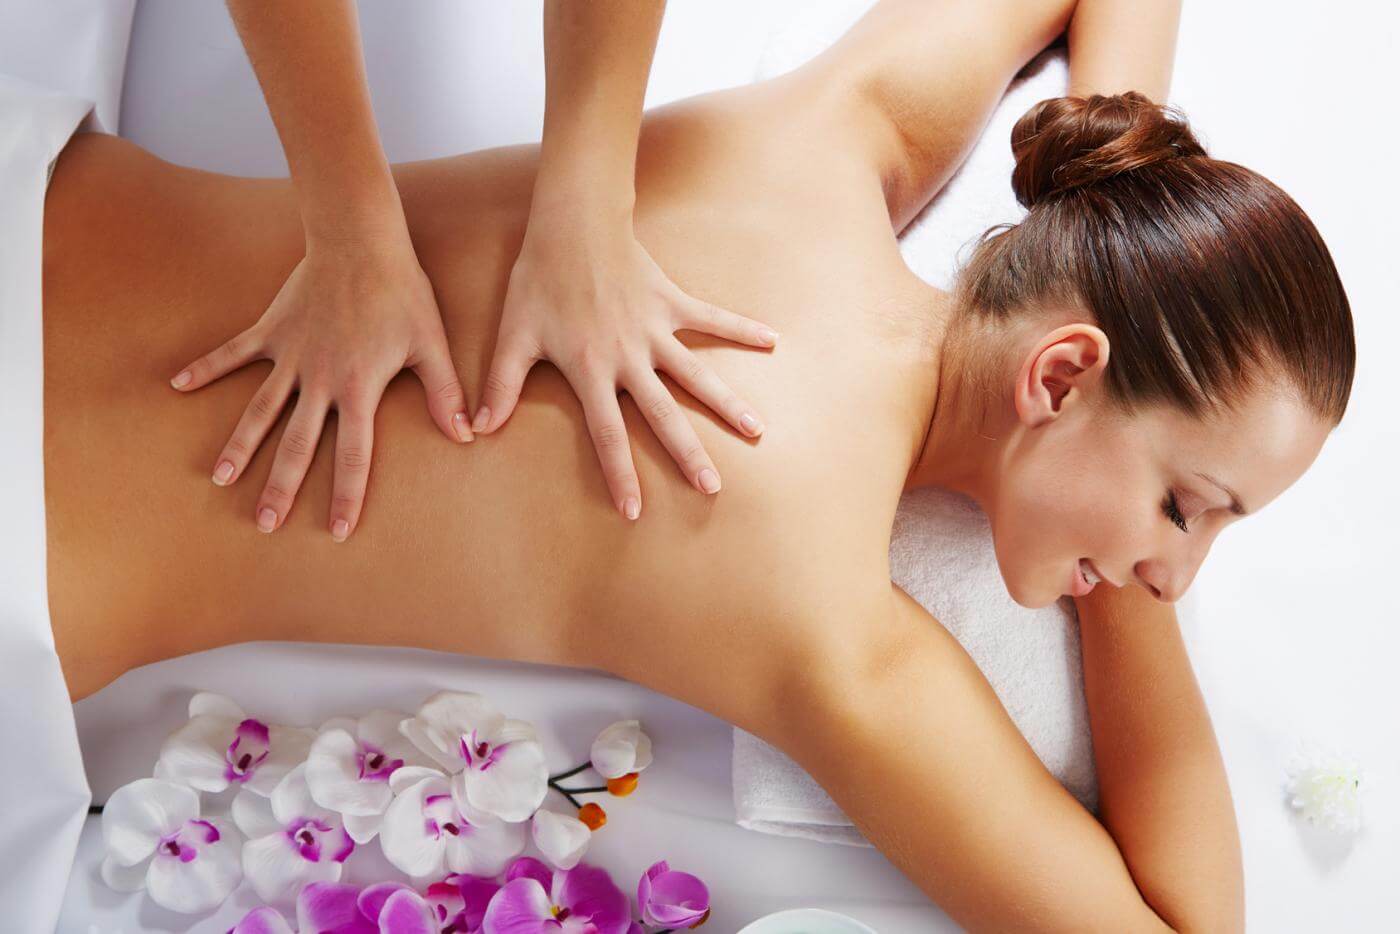 Massage o. Классический массаж. Массаж спины. Классический массаж спины. Классический лечебный массаж.